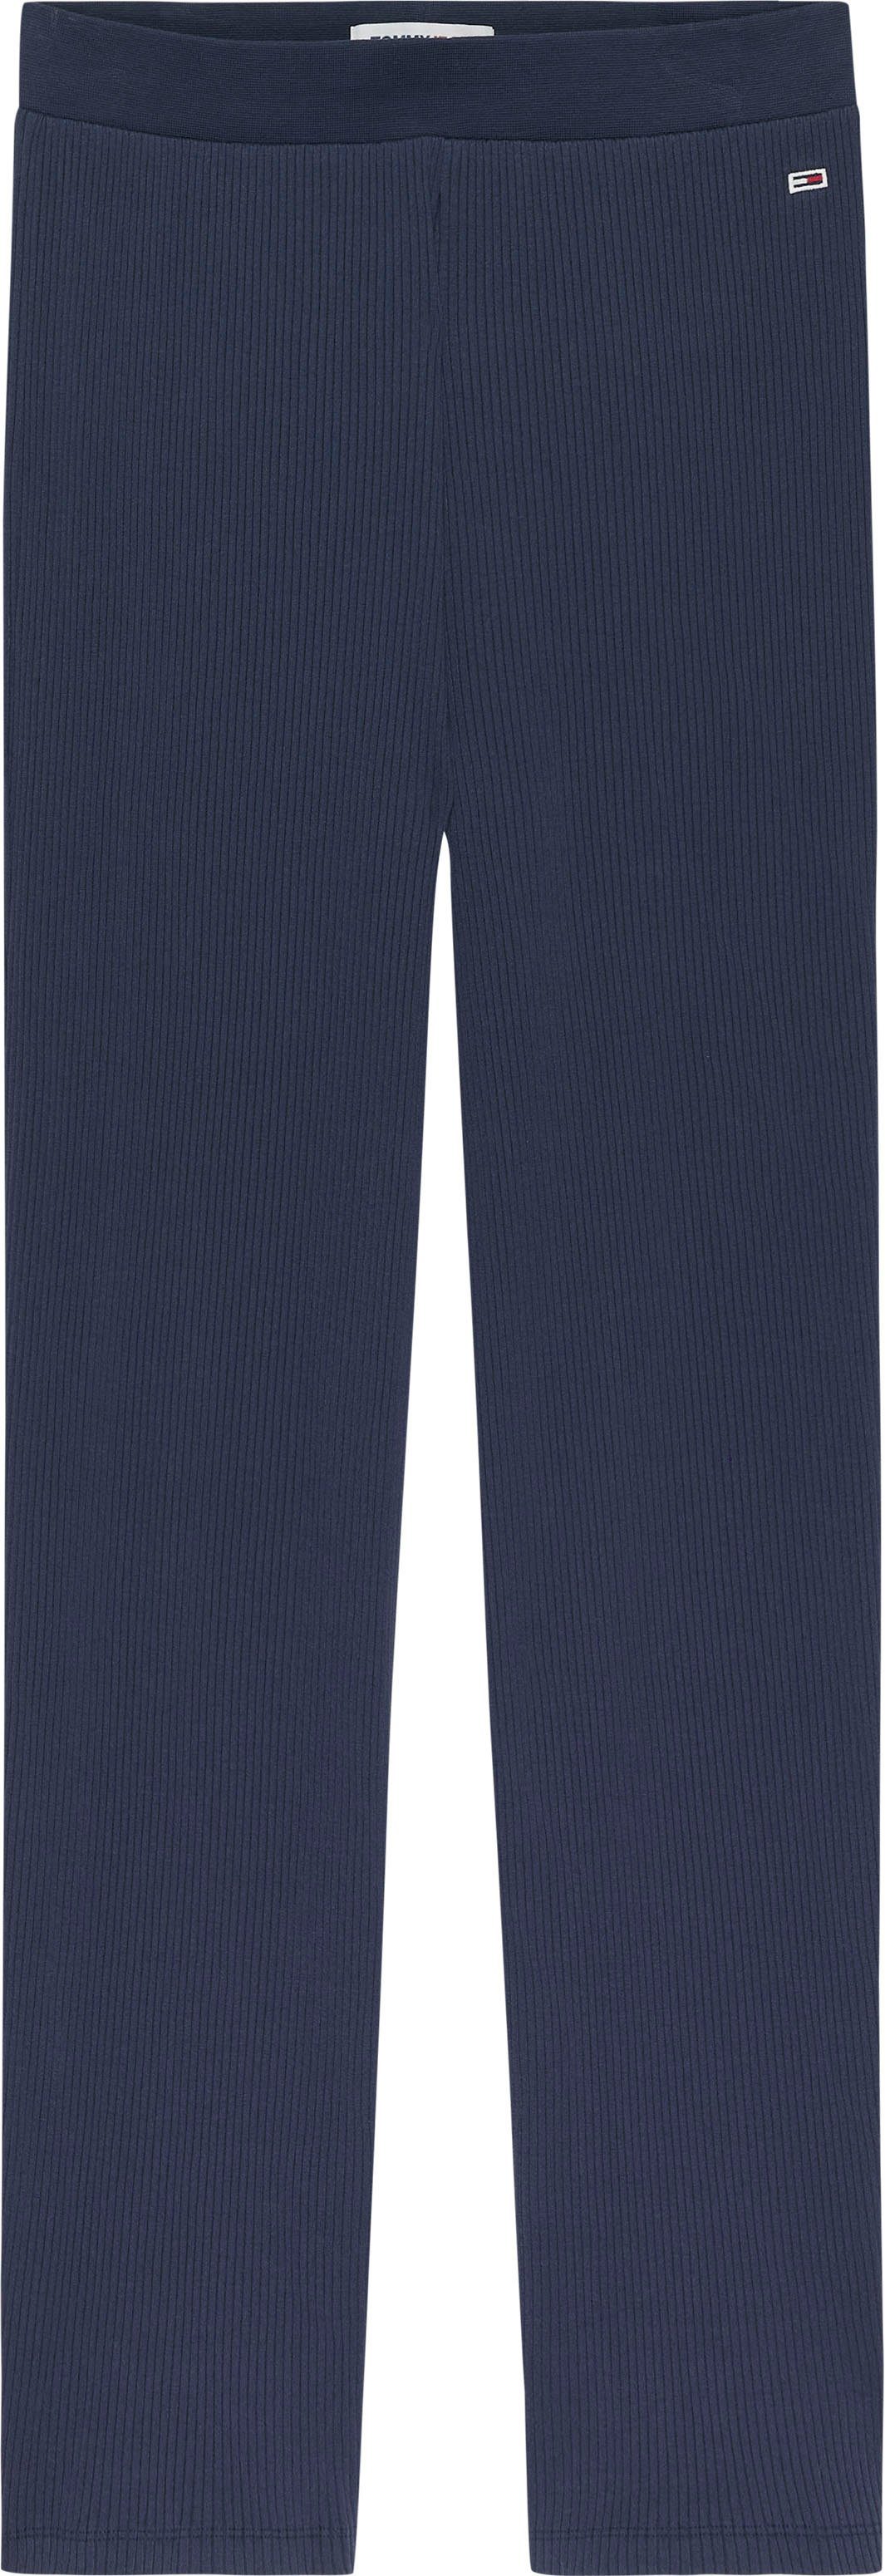 Tommy Jeans Strickhose TJW WIDE LEG KNIT PANT mit Tommy Jeans Logo-Stickerei marine